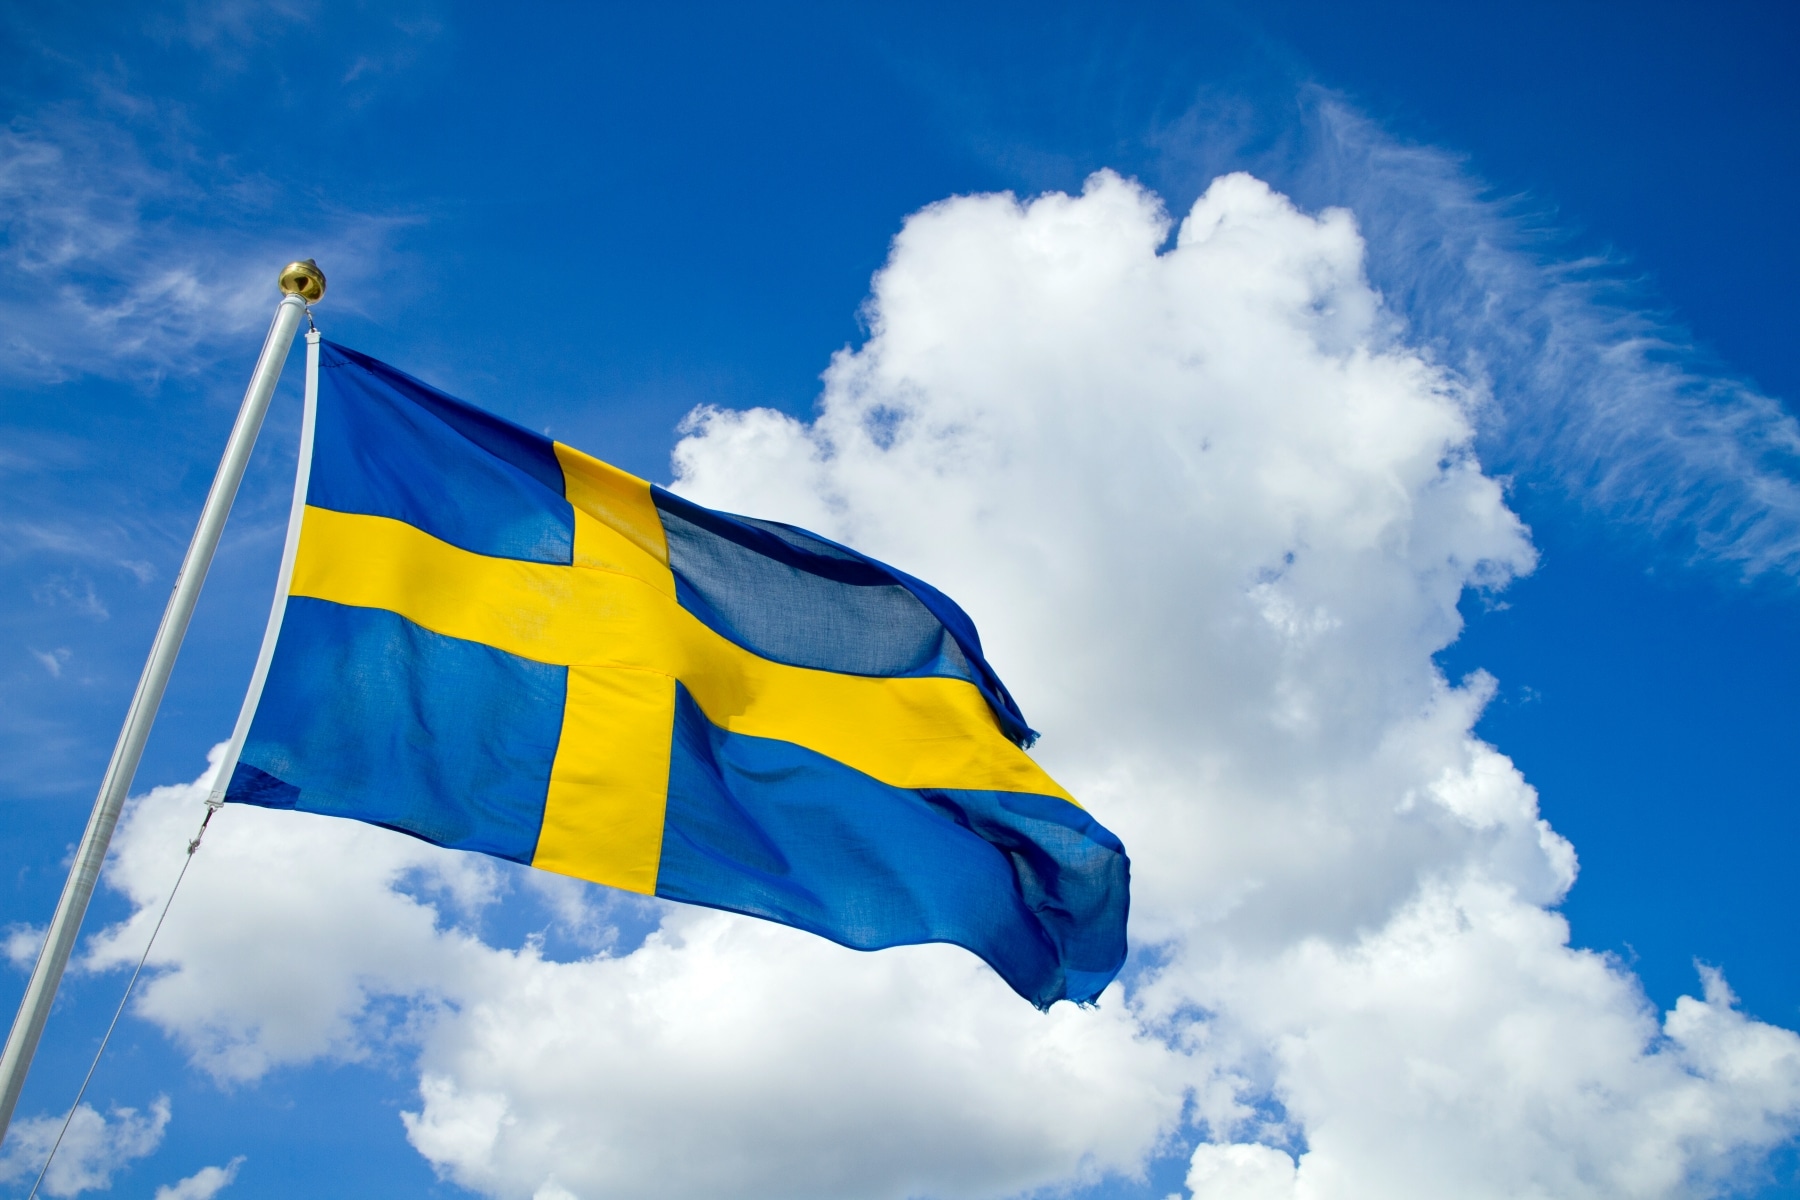 Sveriges flagga vajjar i vinden.